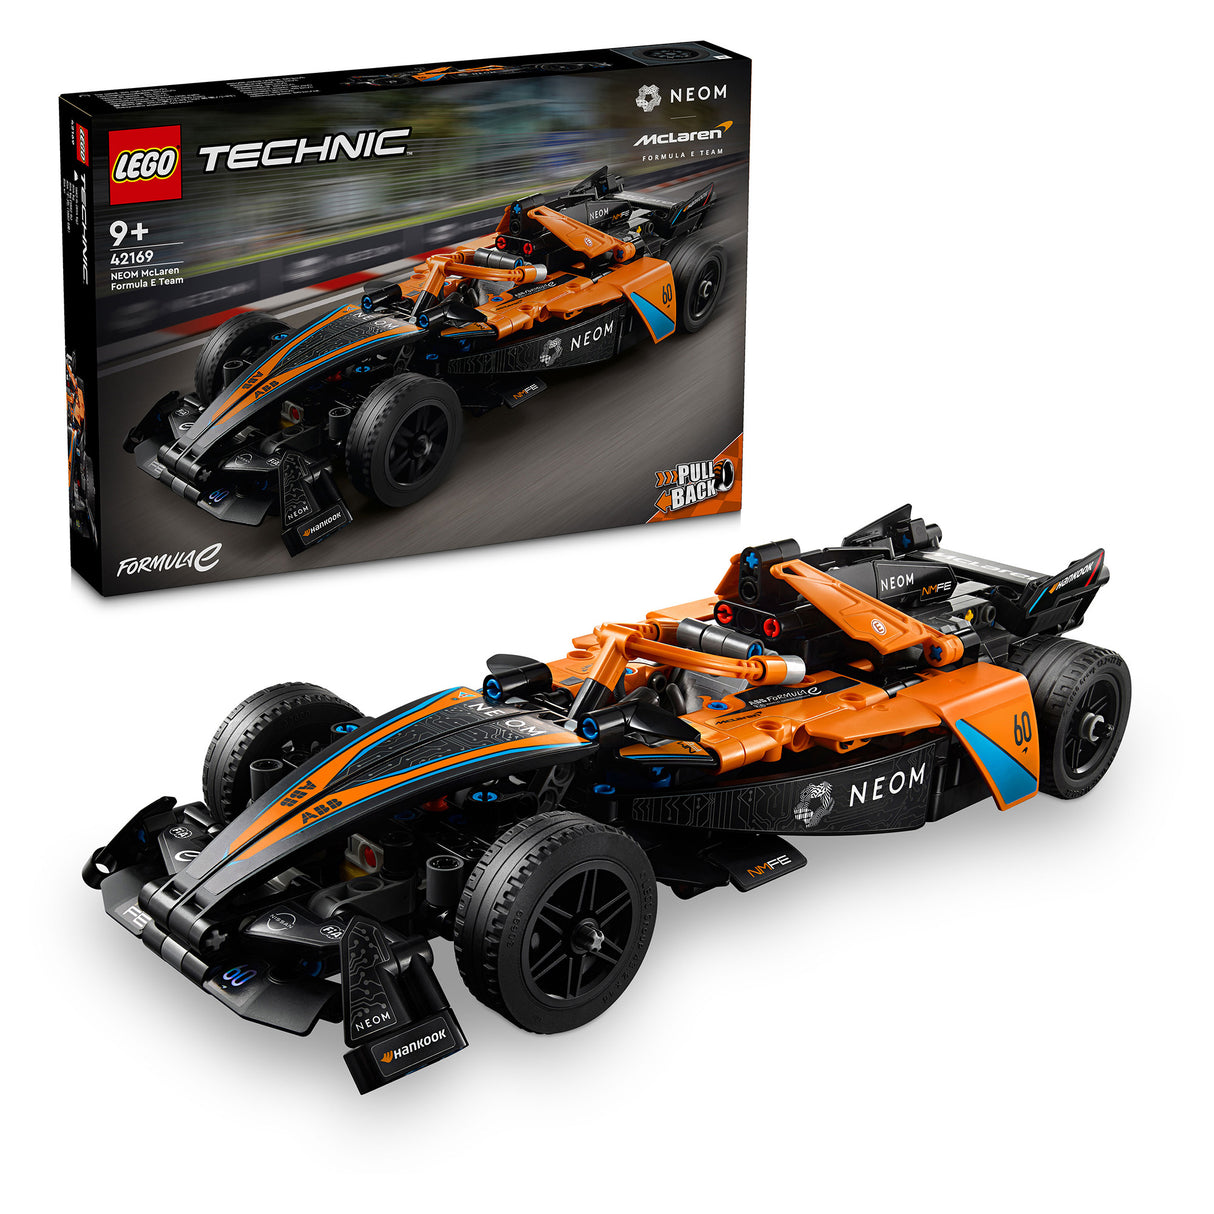 LEGO Technic Neom Mclaren Formula E Race Car 42169